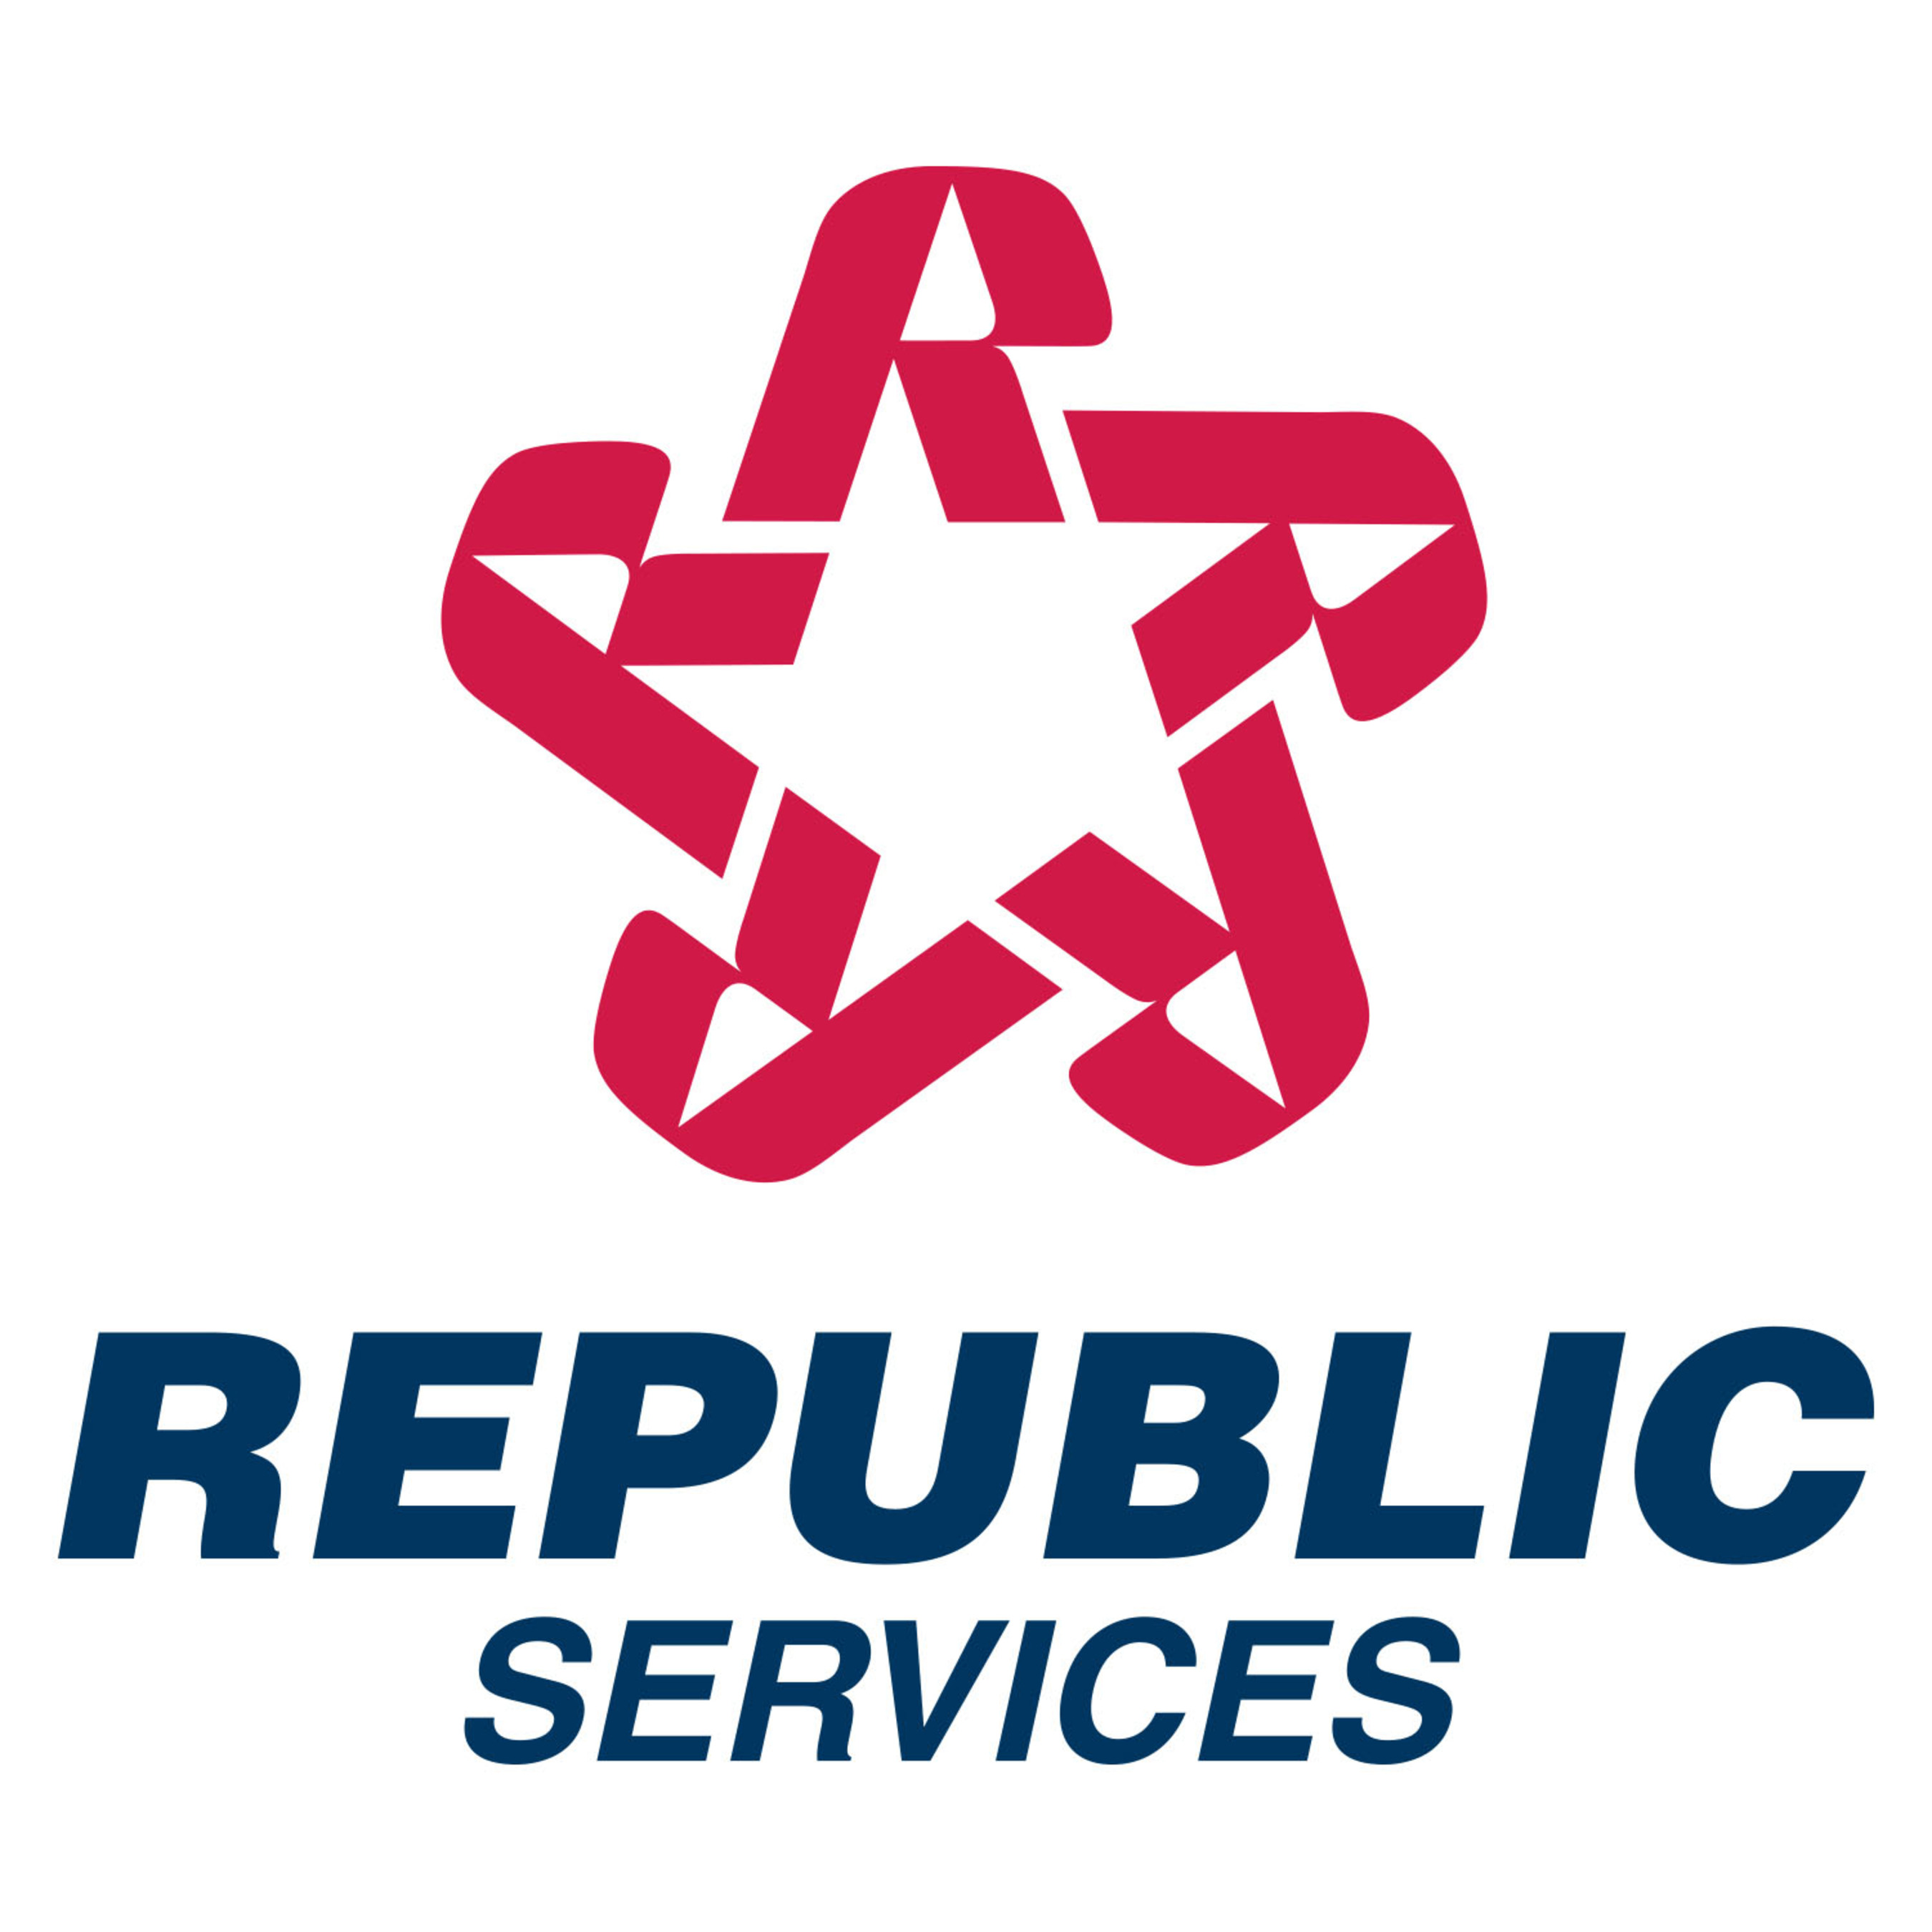 Republic Services, Inc. logo. (PRNewsFoto/Republic Services, Inc.) (PRNewsFoto/REPUBLIC SERVICES, INC.)